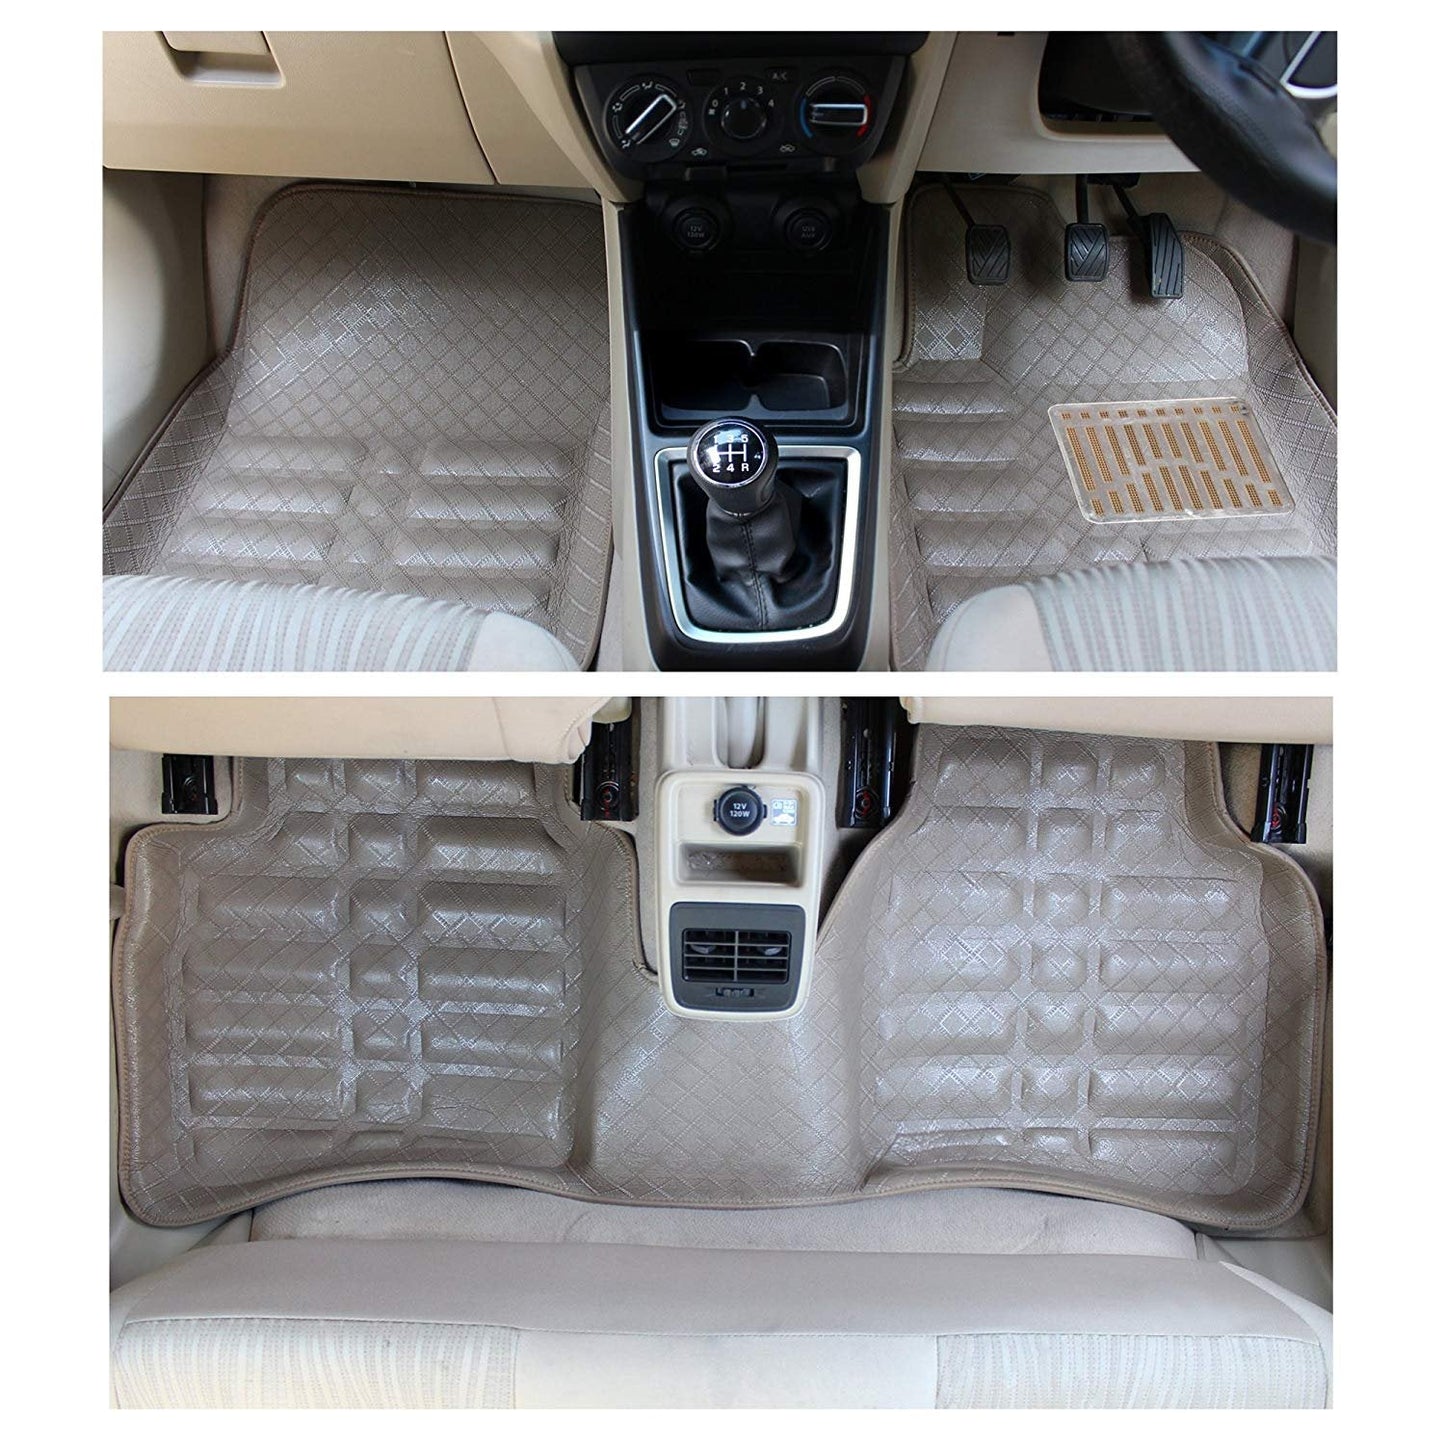 Oshotto 4D Artificial Leather Car Floor Mats For Maruti Suzuki Sx4 (Set of 3) - Beige